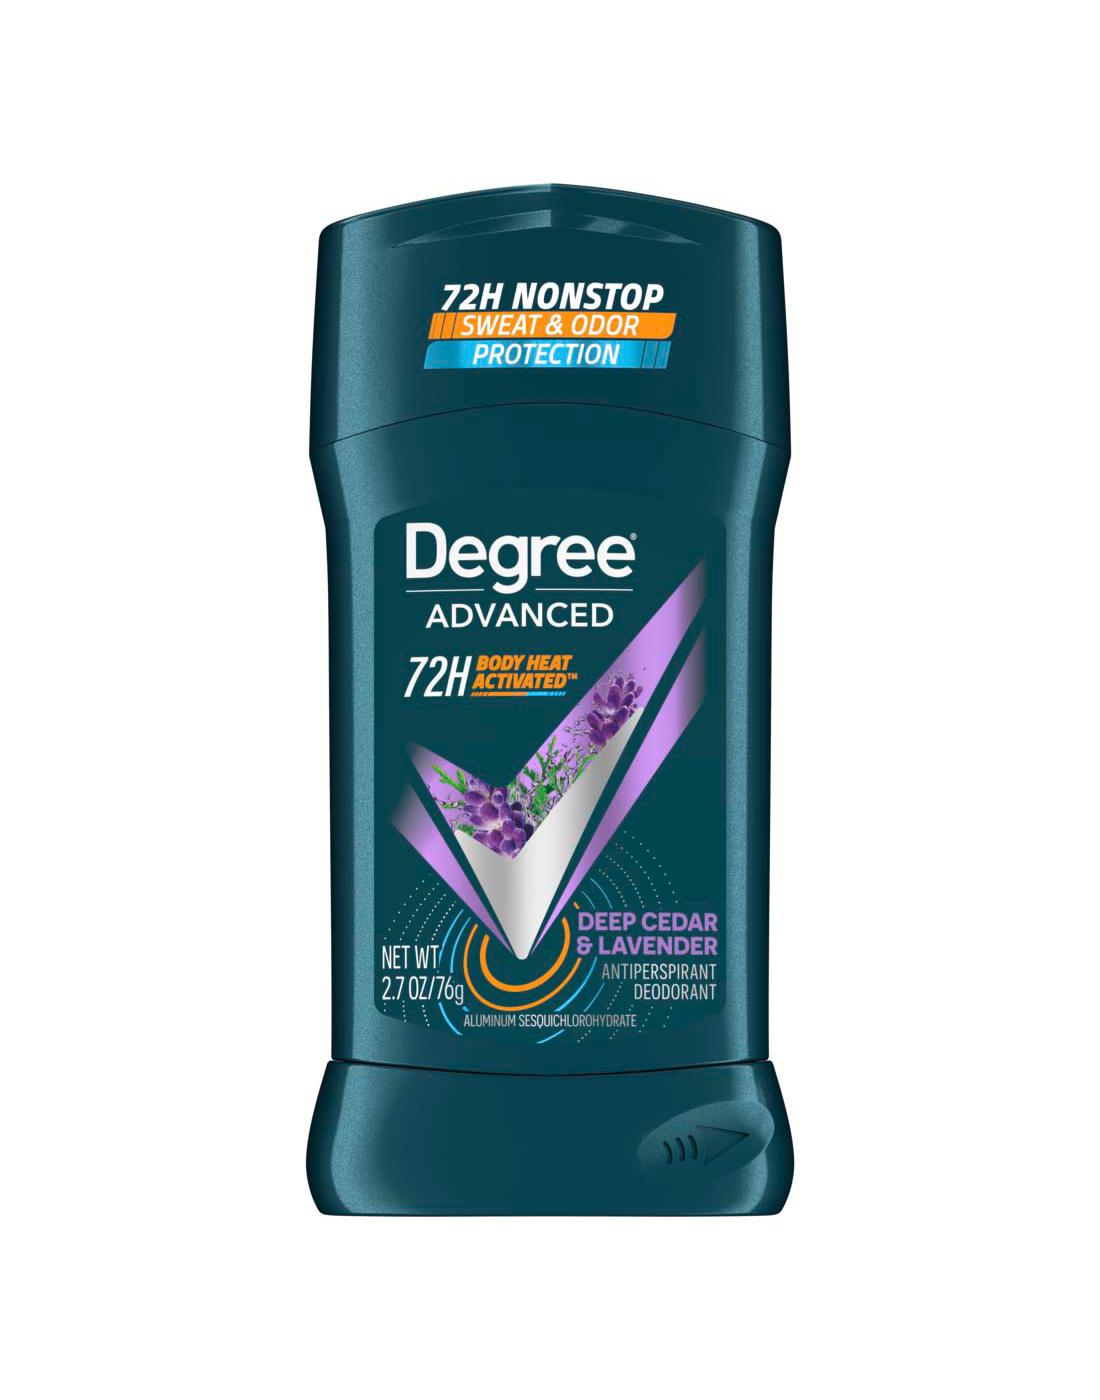 Degree Advanced Antiperspirant Deodorant - Deep Cedar & Lavender; image 1 of 4